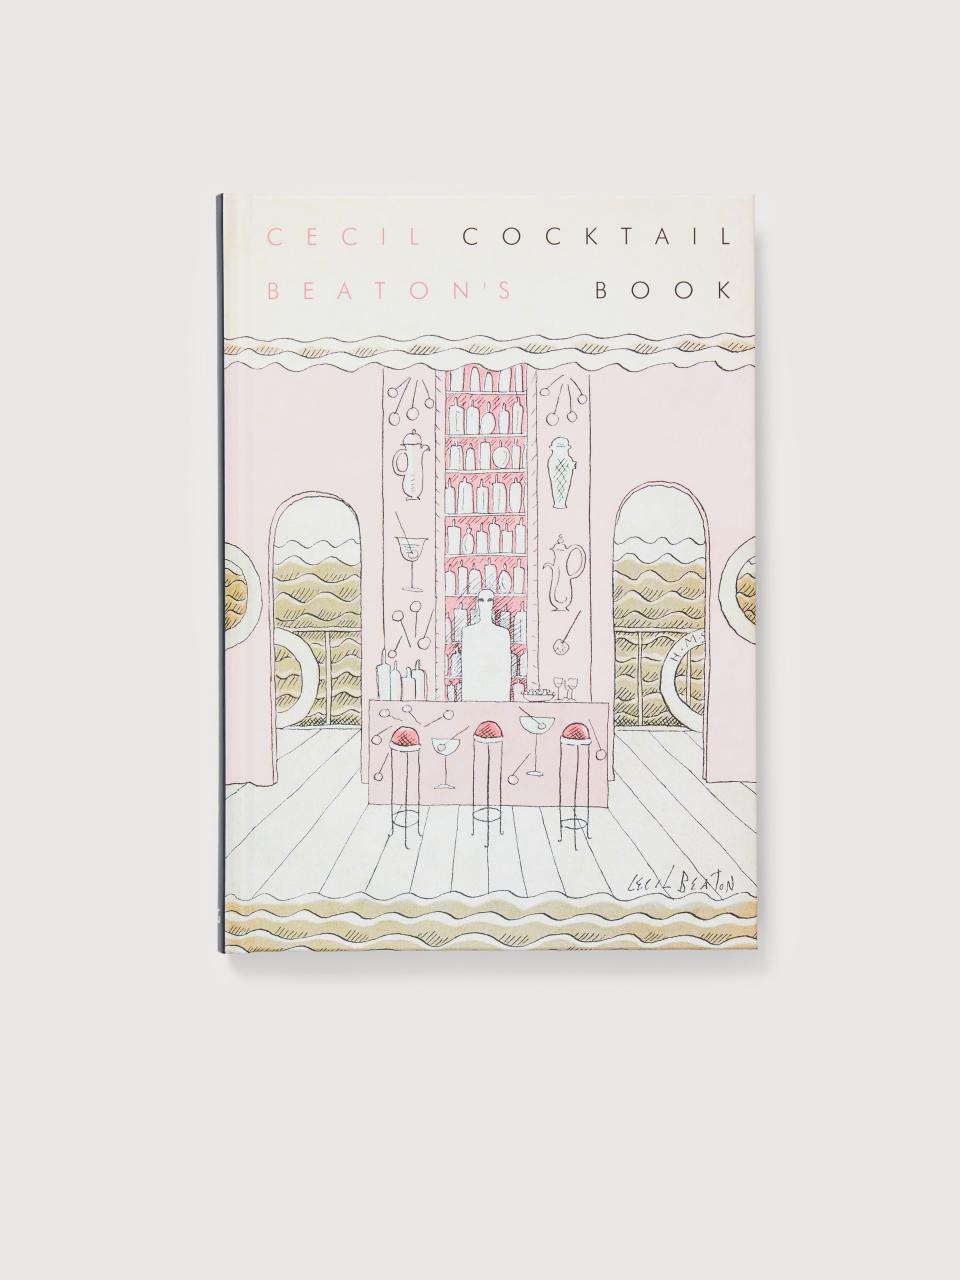 Cecil Beaton's Cocktail Book